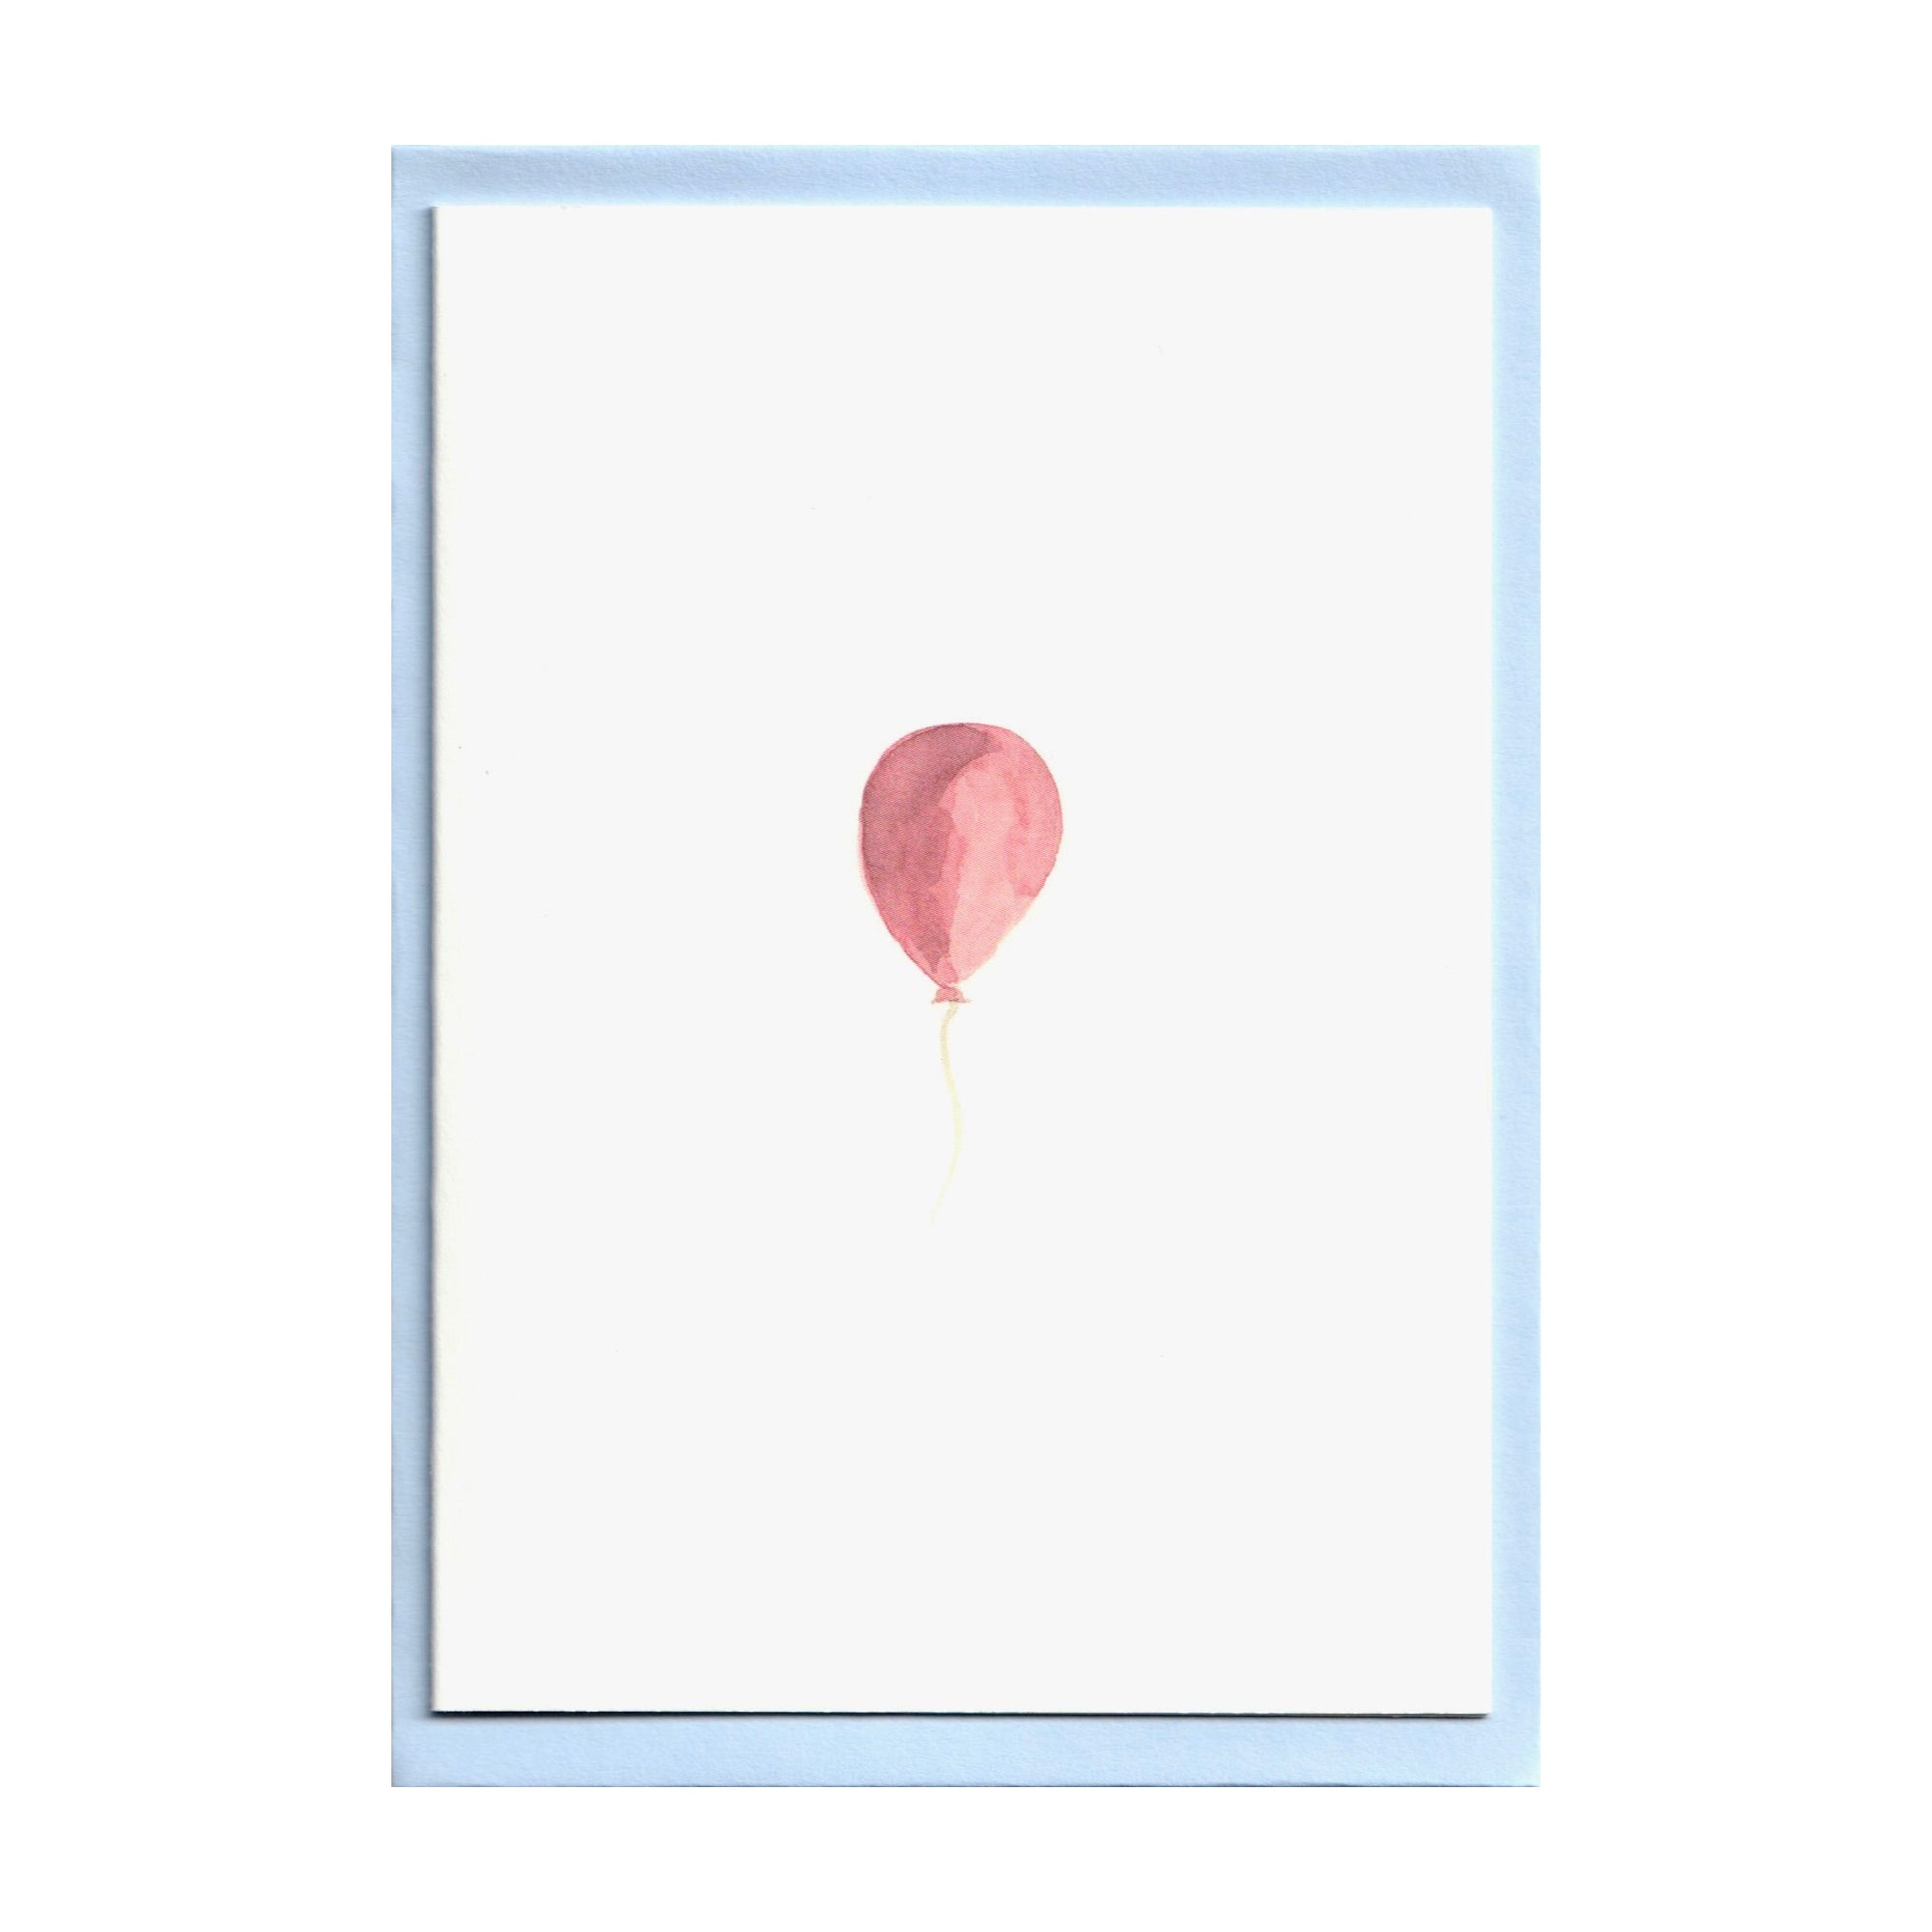 Balloon greetings card by Memo Press